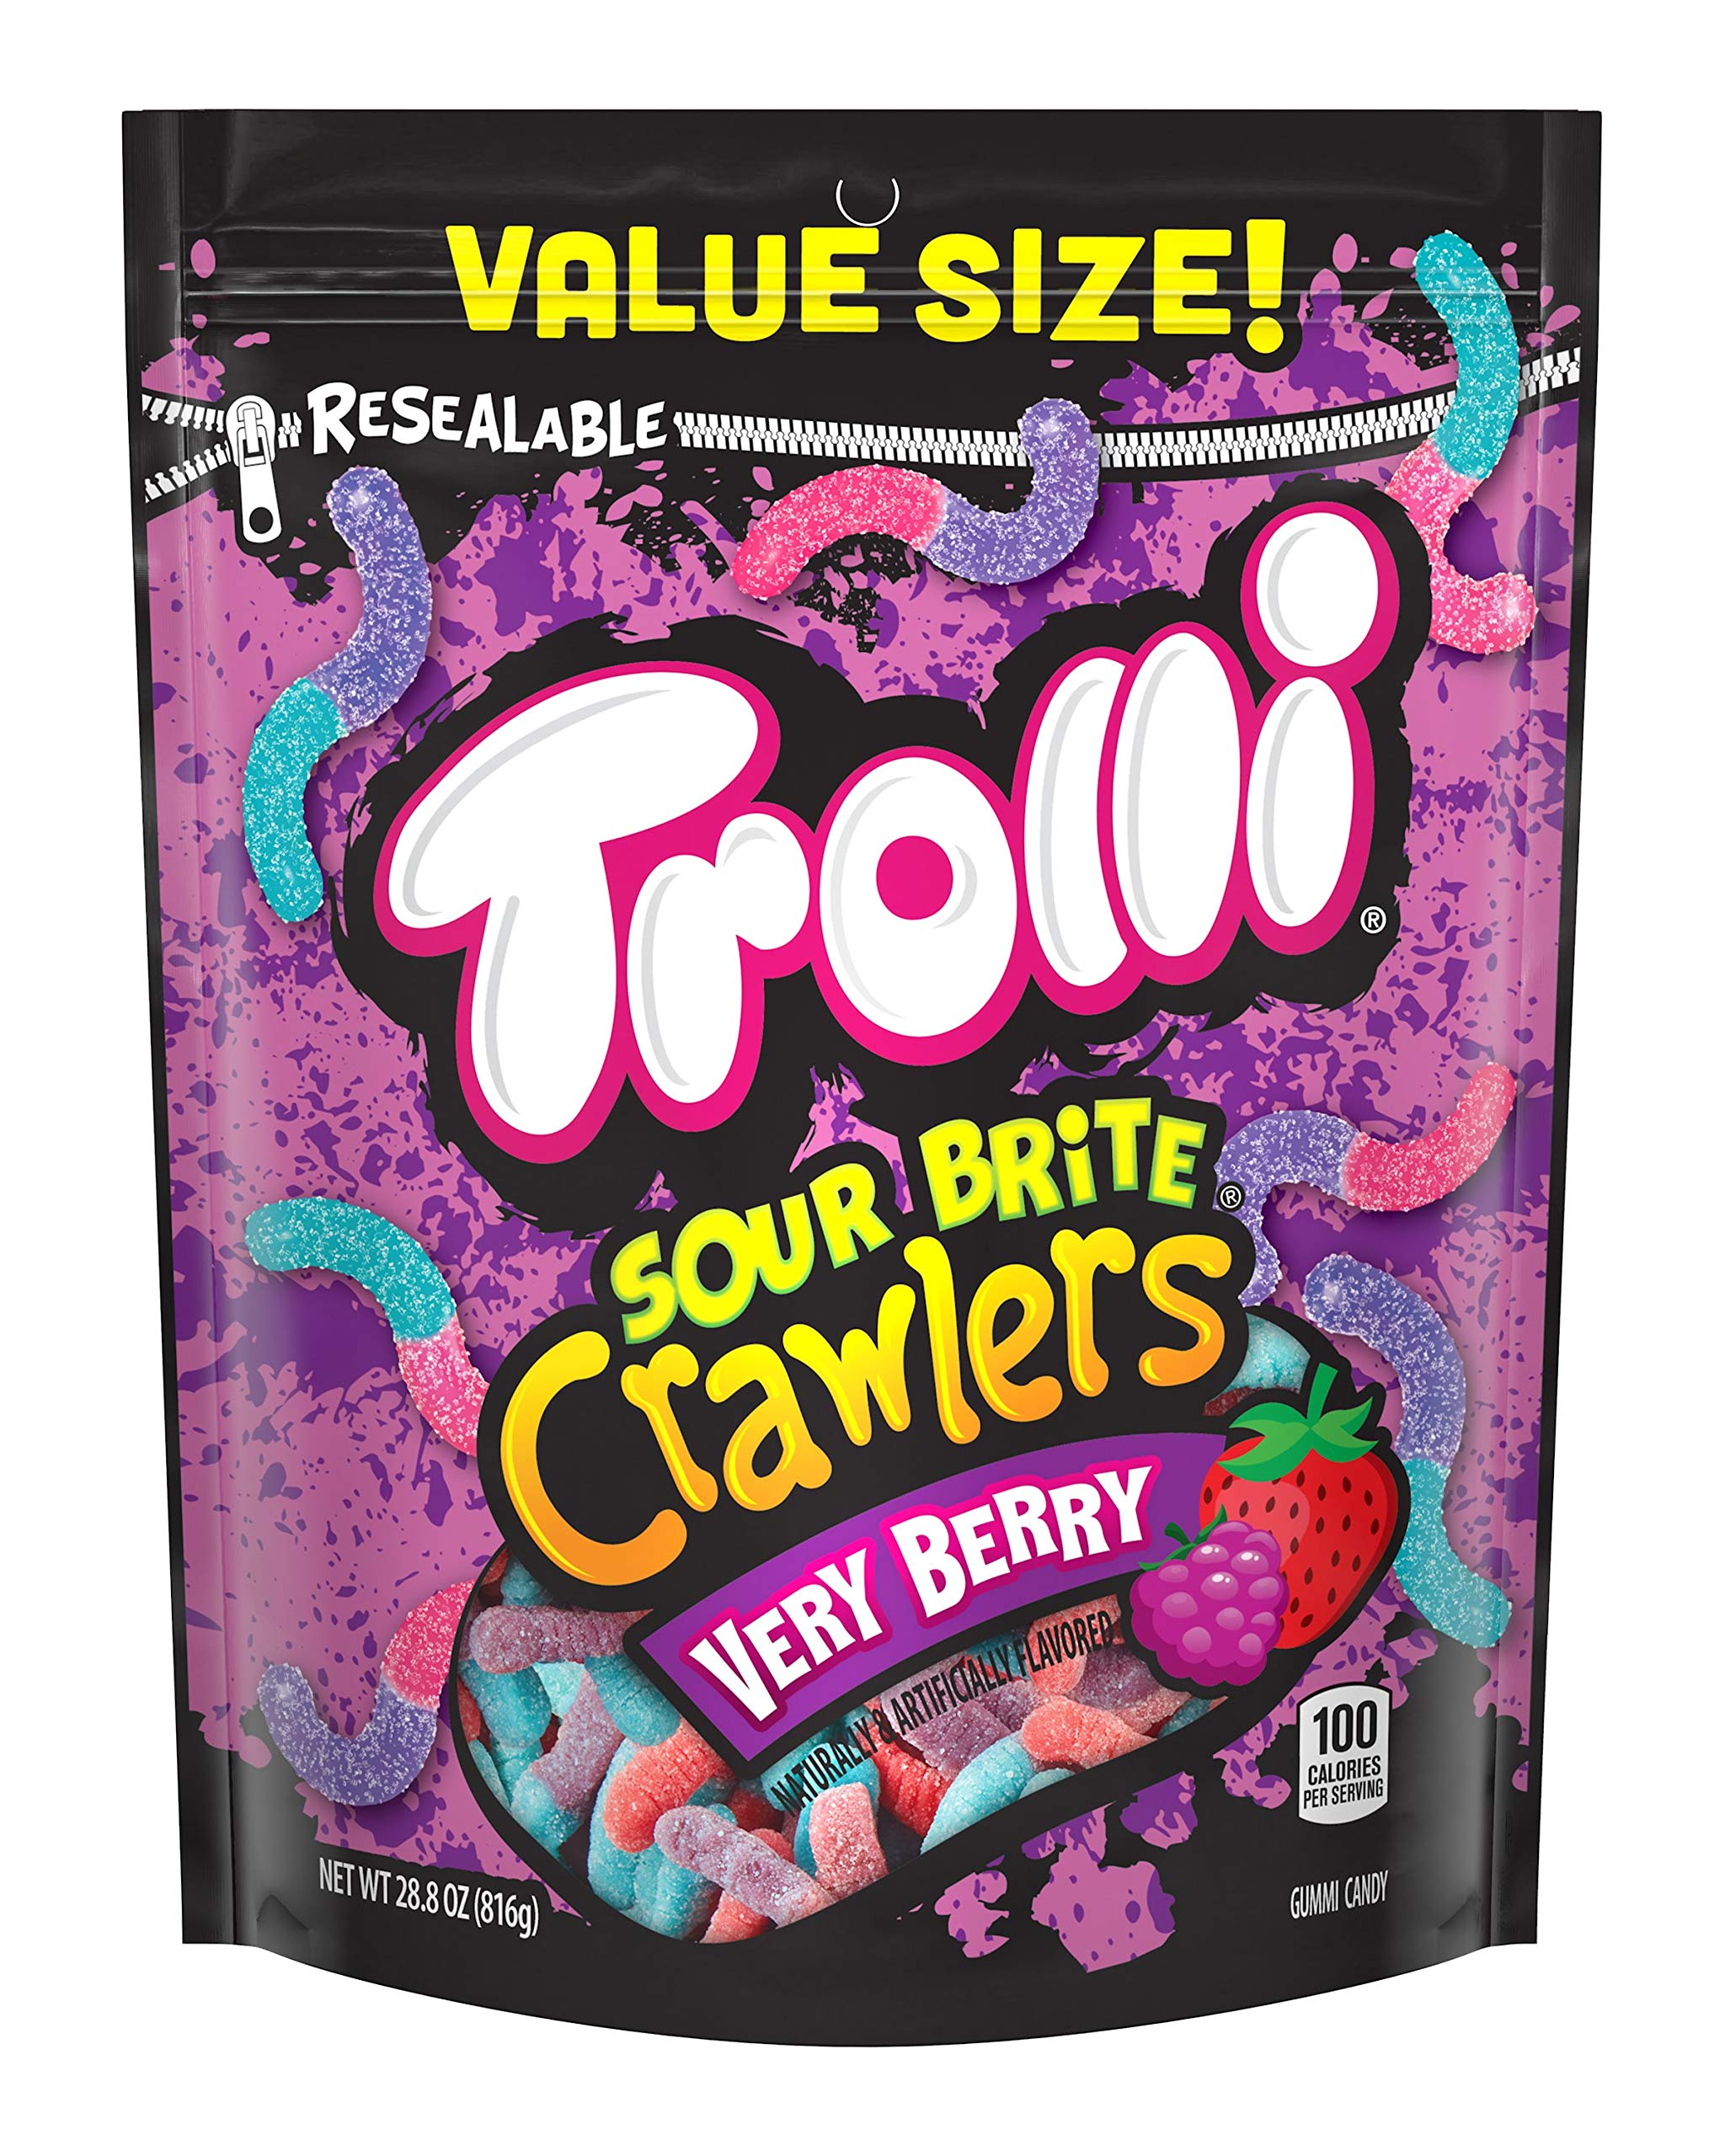 28.8-Oz Trolli Sour Brite Crawlers Very Berry Gummy Worms $2.55.